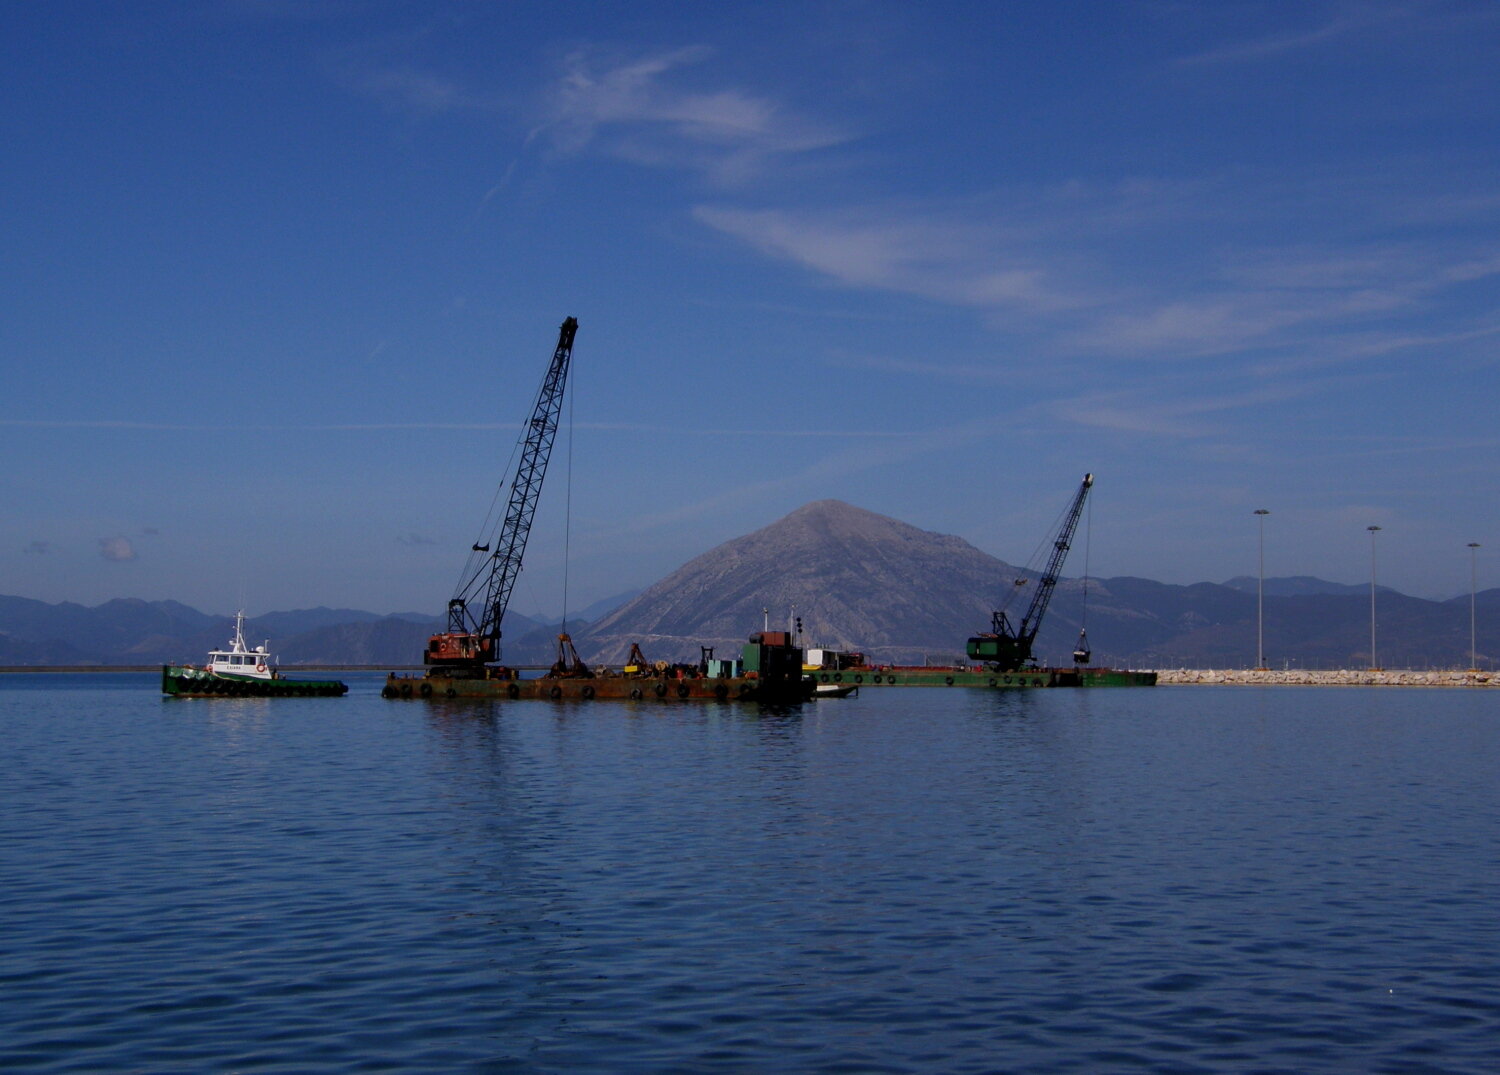 patras port construction works 031112